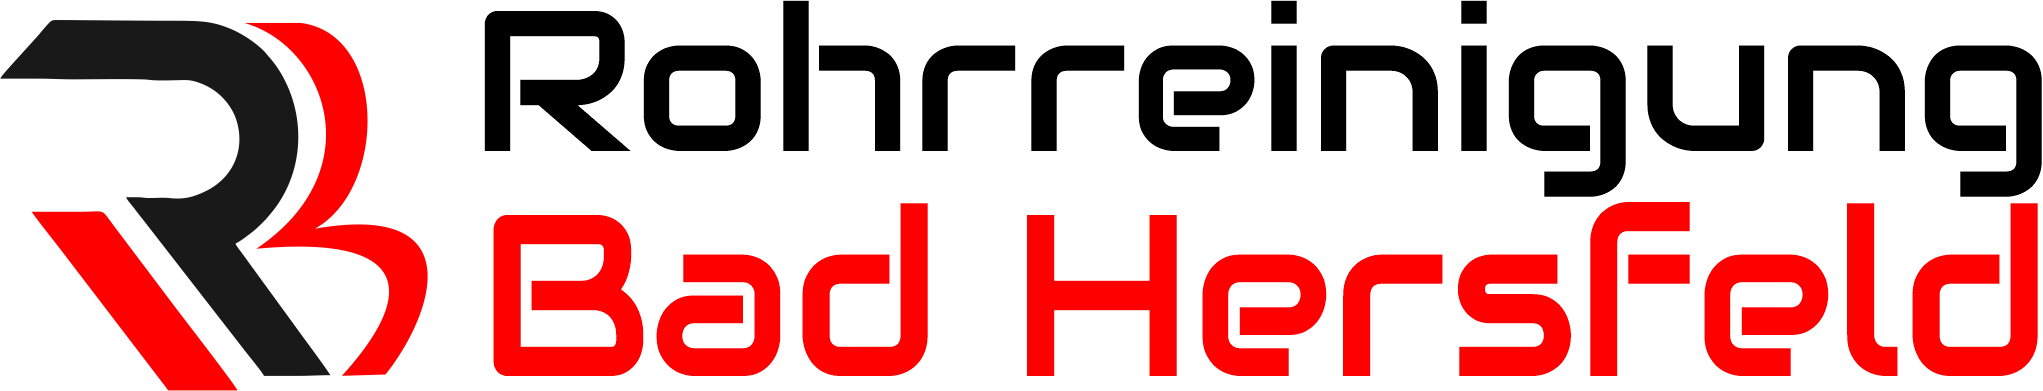 Rohrreinigung Bad Hersfeld Logo